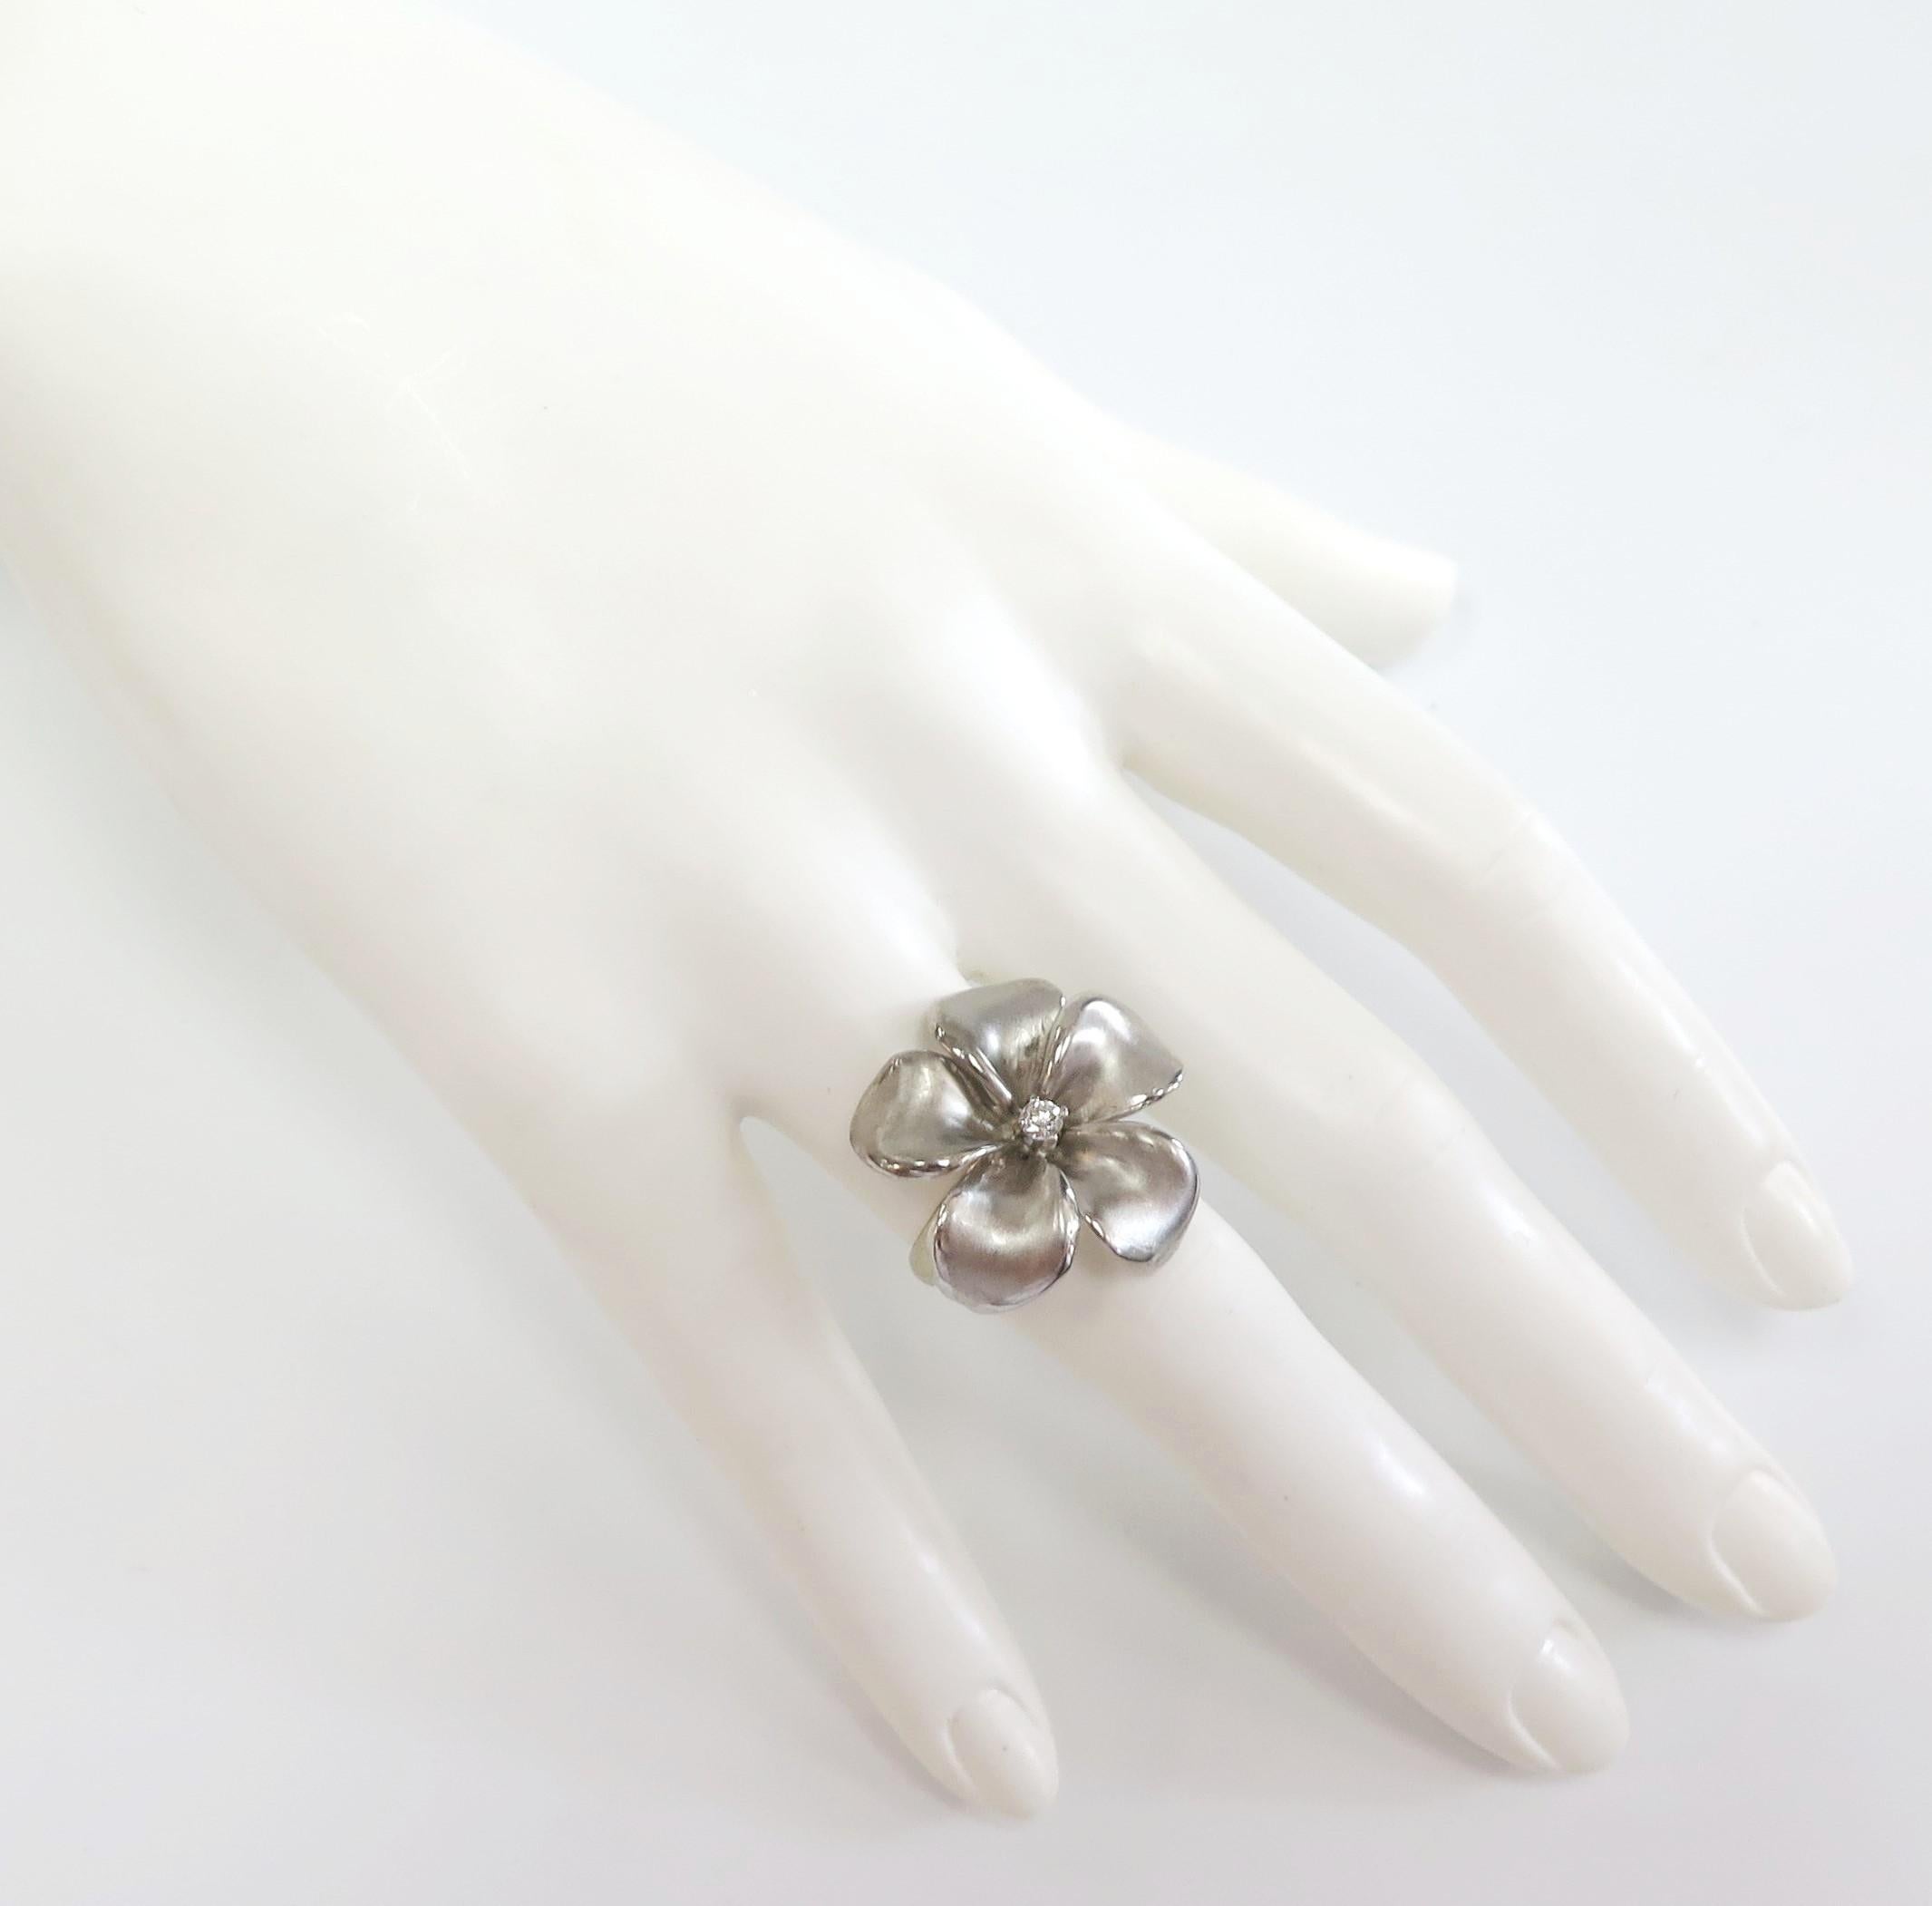 Modern Large Flower Ring with Center Diamond / 14 Karat White Gold